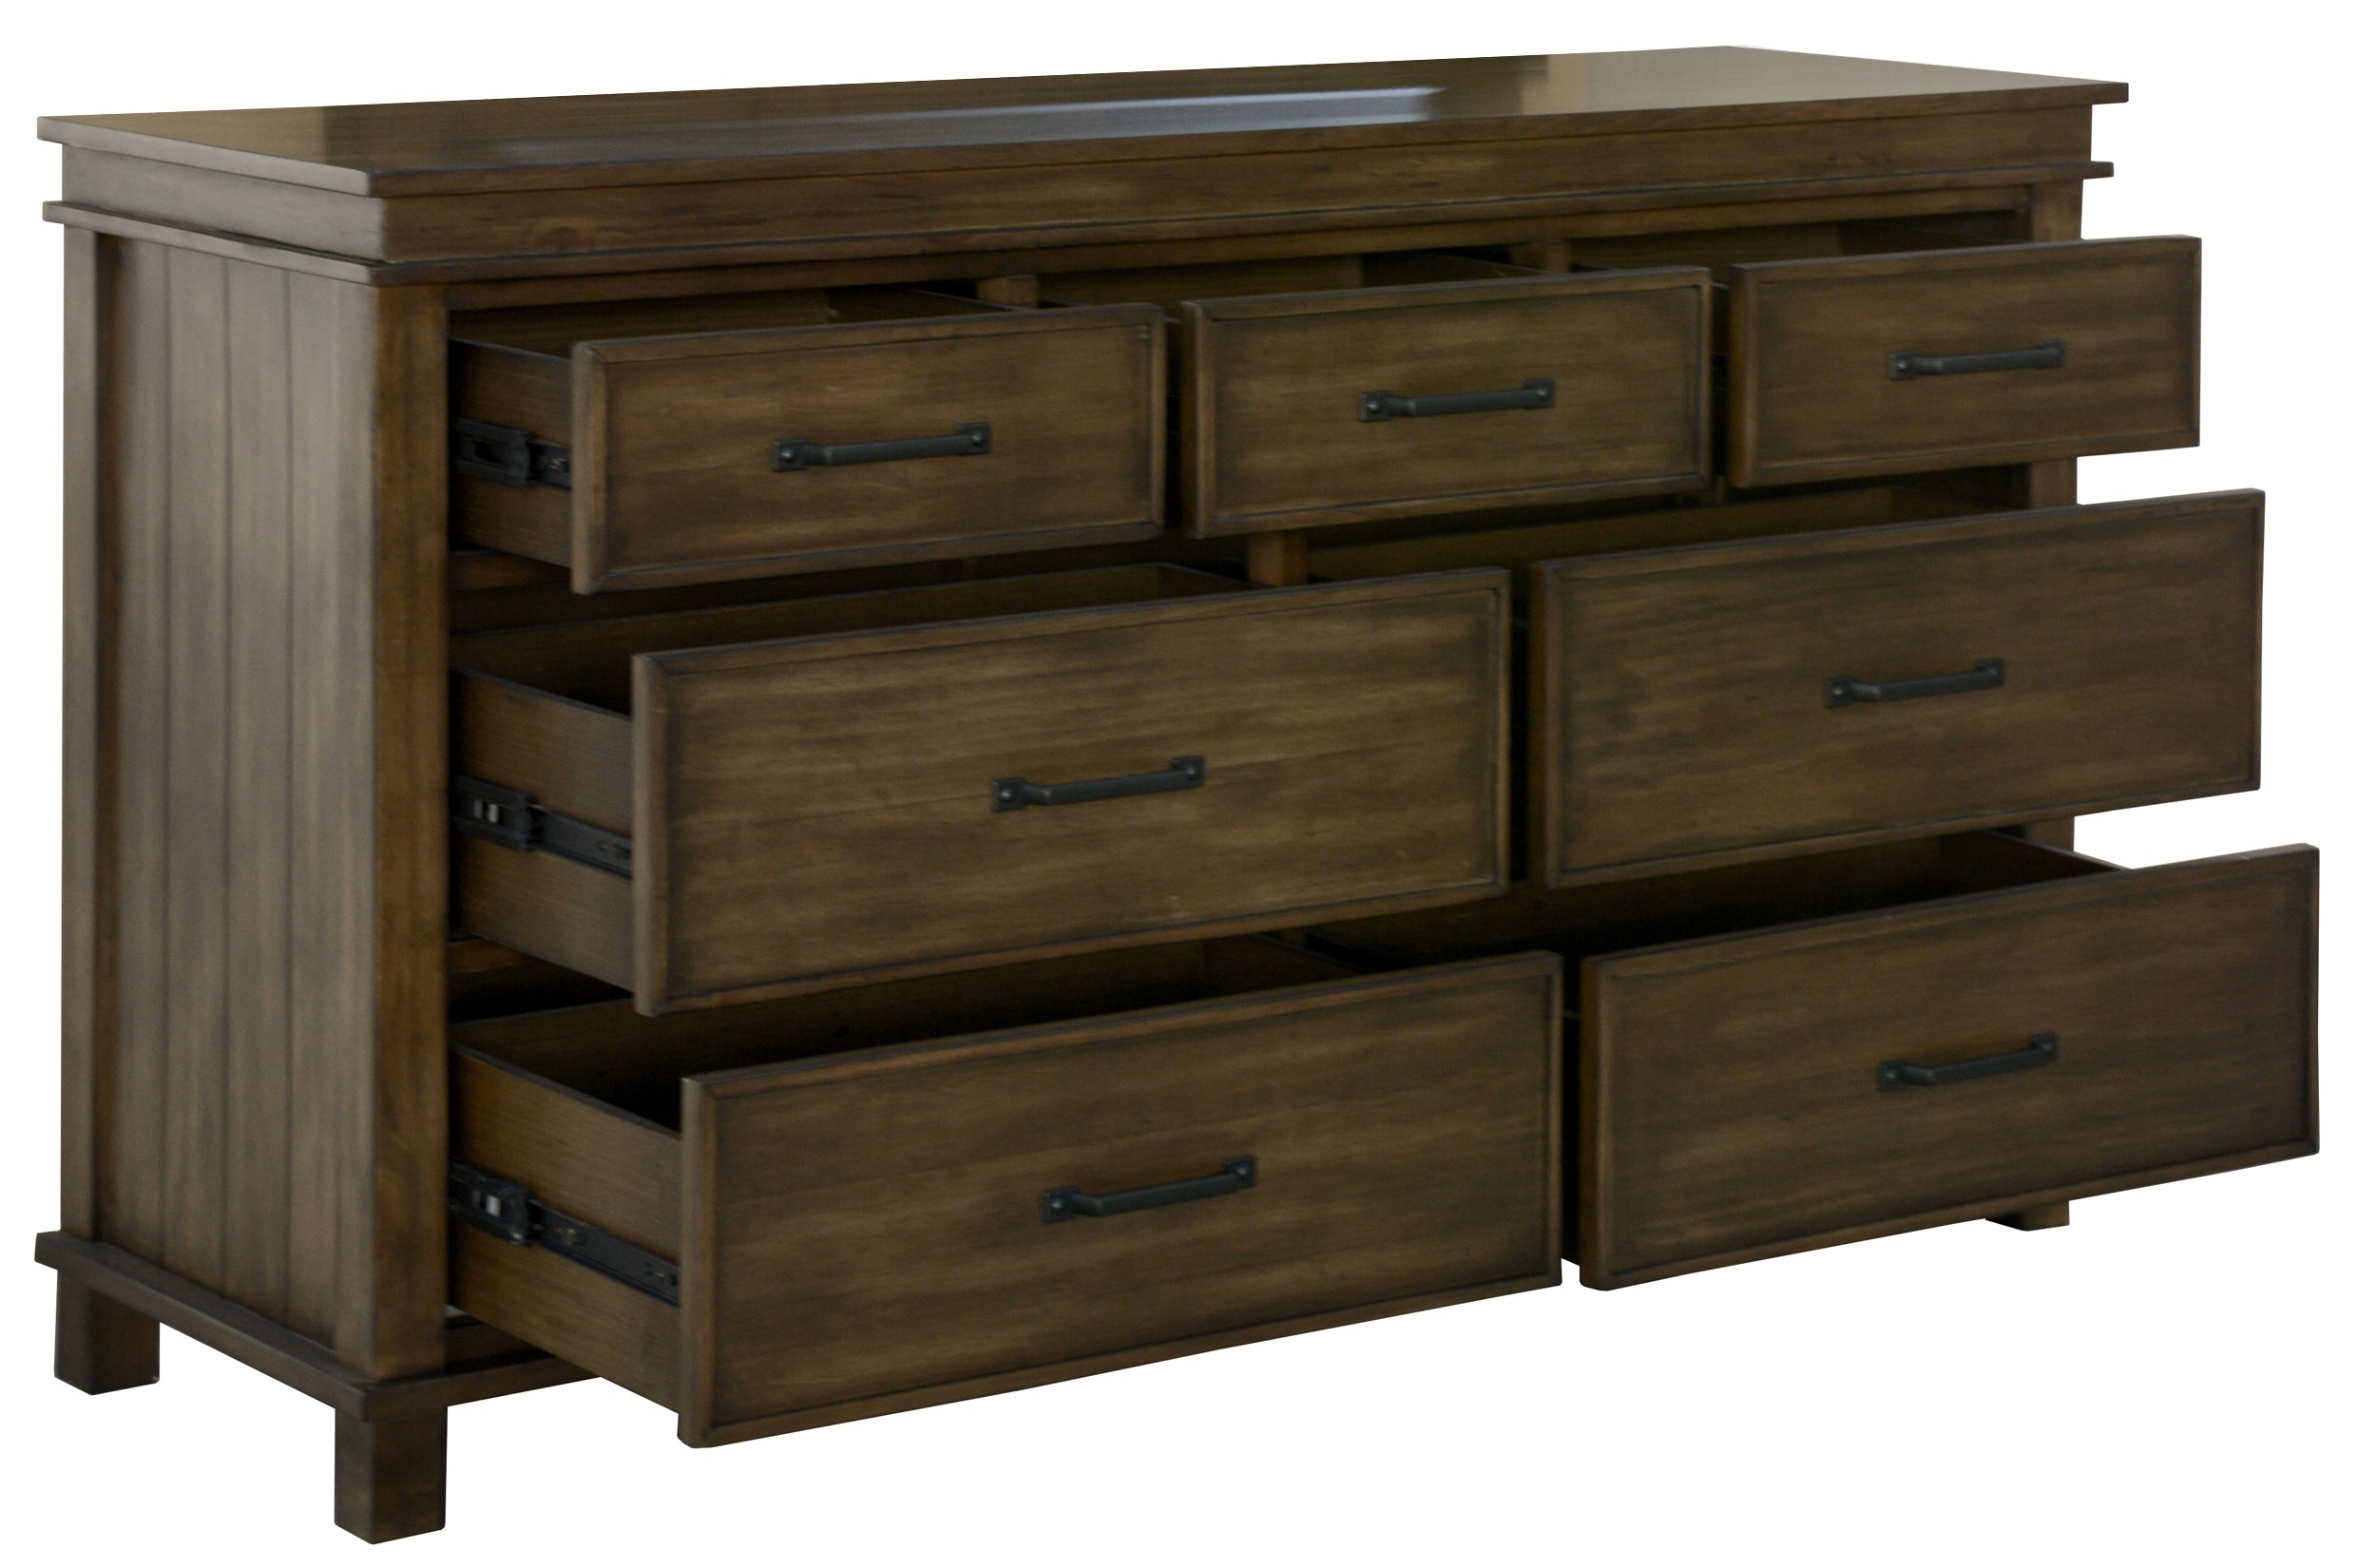 Lily Dresser Mirror 7 Chest of Drawers Tallboy Storage Cabinet - Rustic Grey